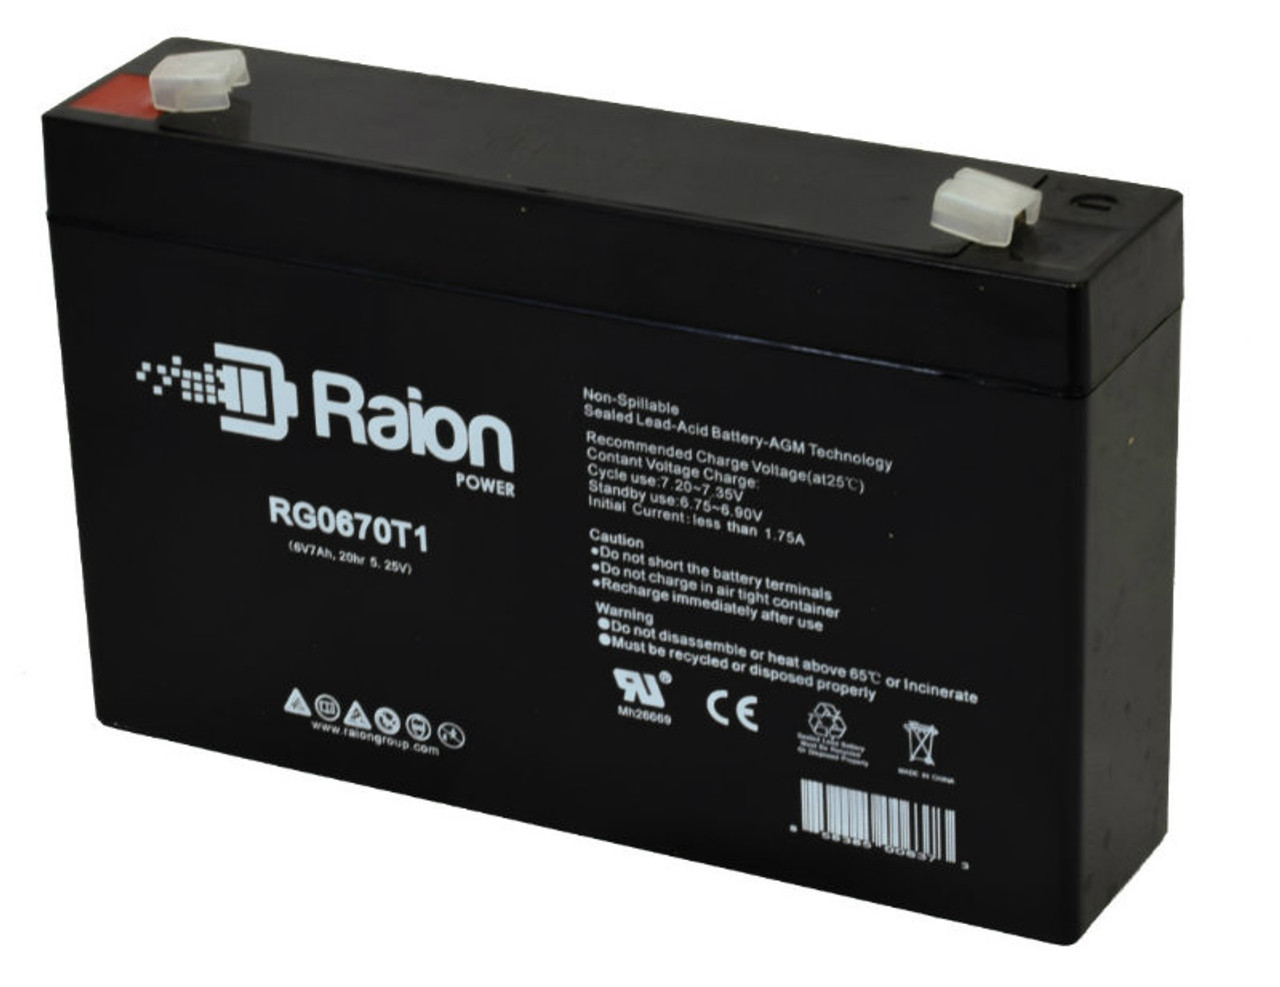 Raion Power RG0670T1 6V 7Ah Replacement Battery Cartridge for Alaris Medical Pc1 Gemini Infusion Pump/Controller Medical Equipment